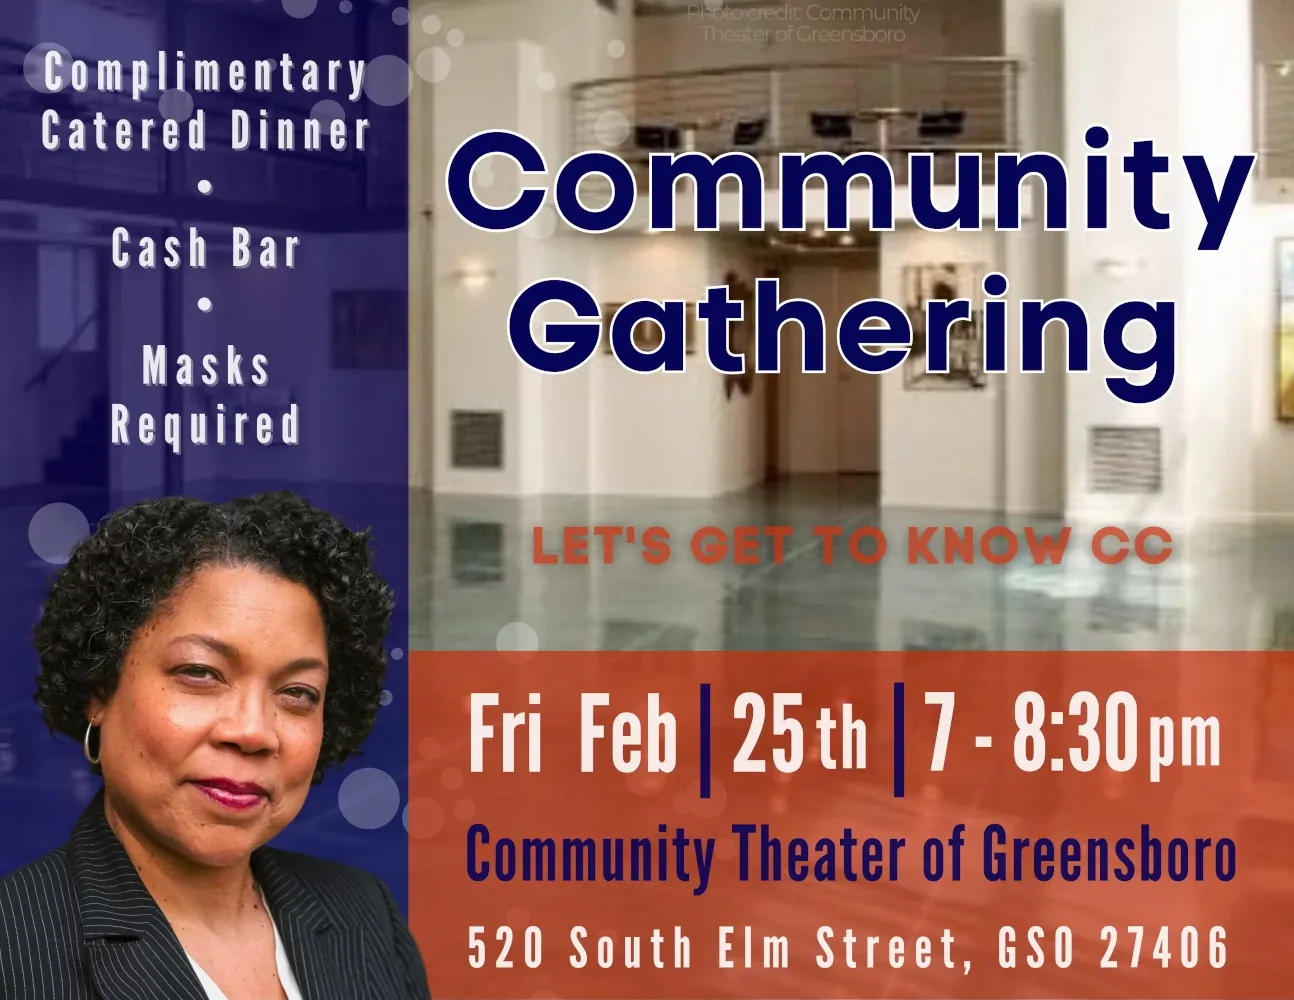 Community Gathering invitation